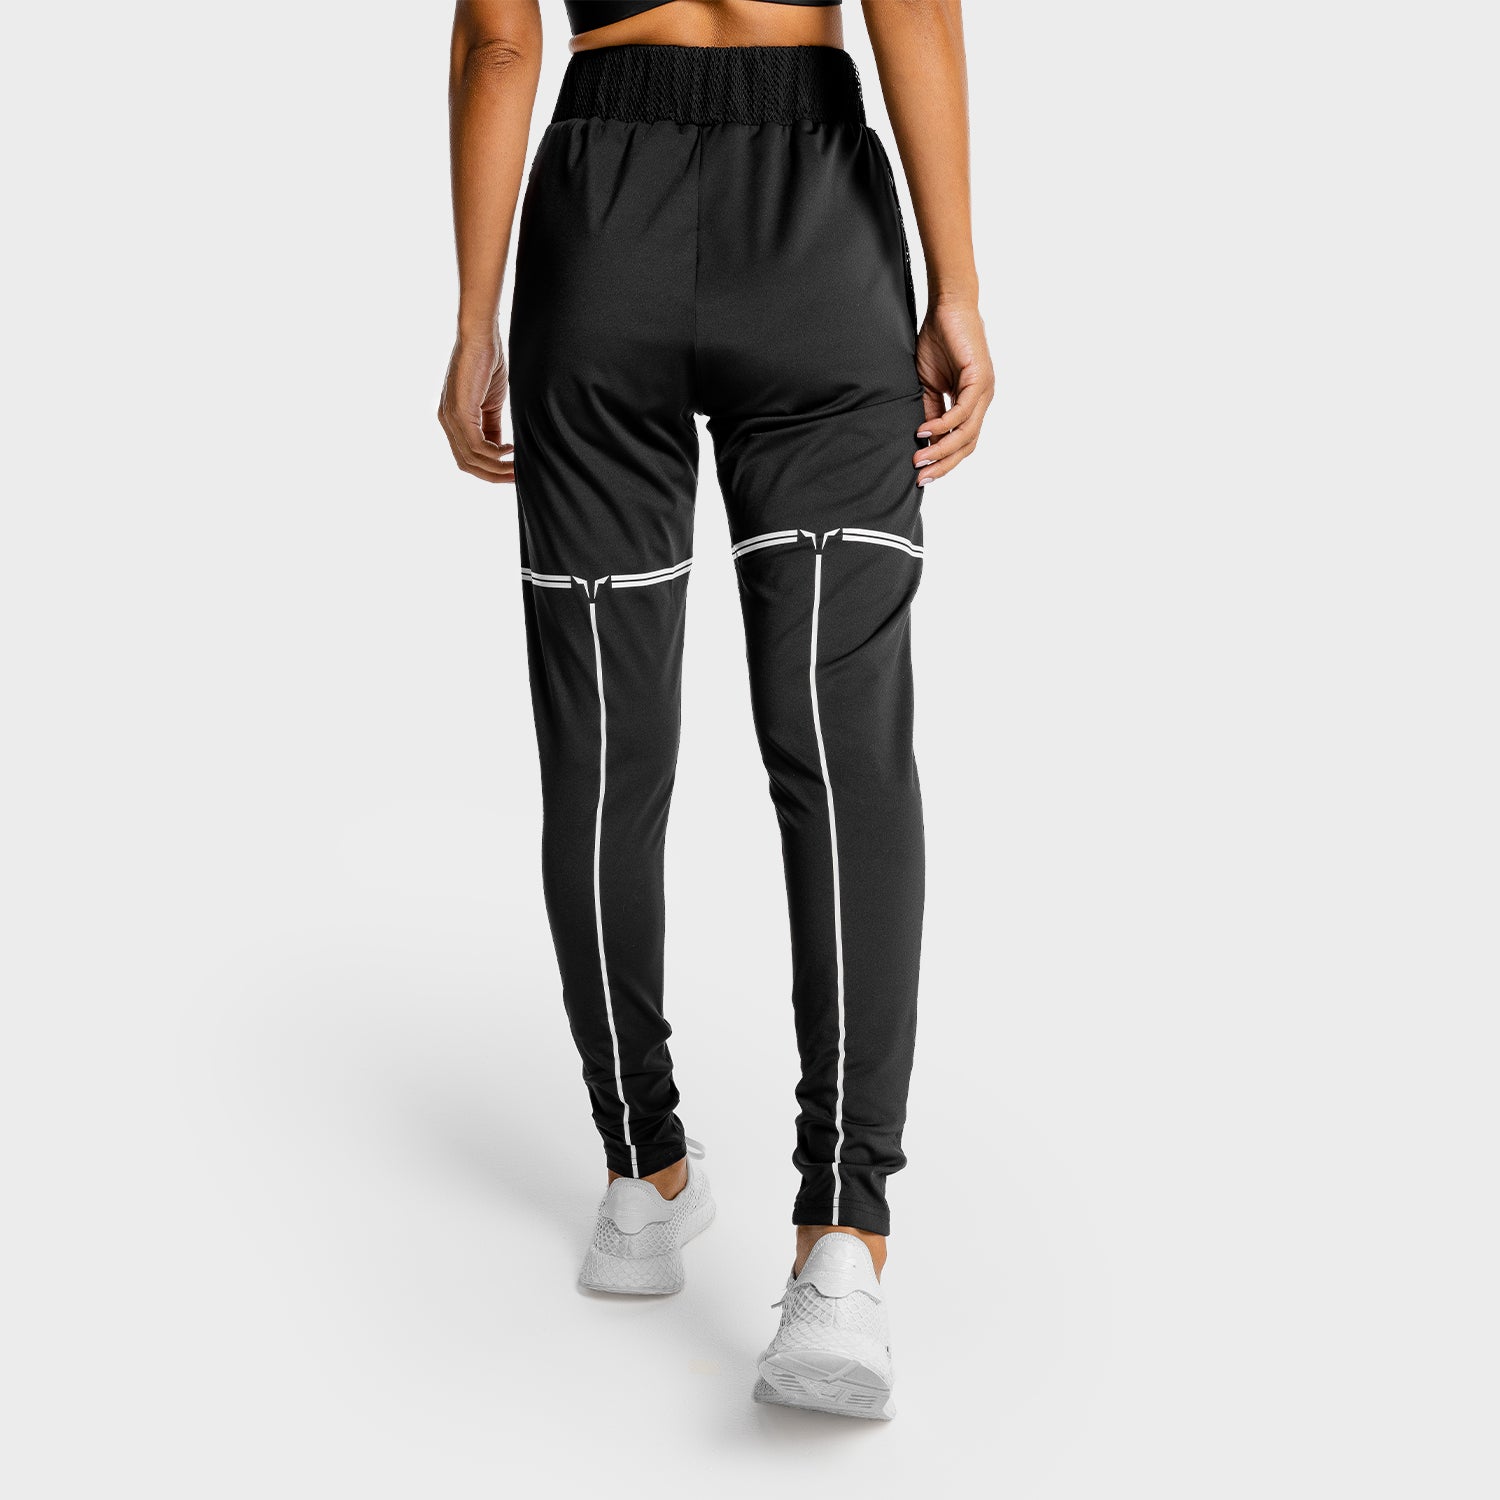 squatwolf-gym-pants-for-women-noor-track-pants-black-workout-clothes